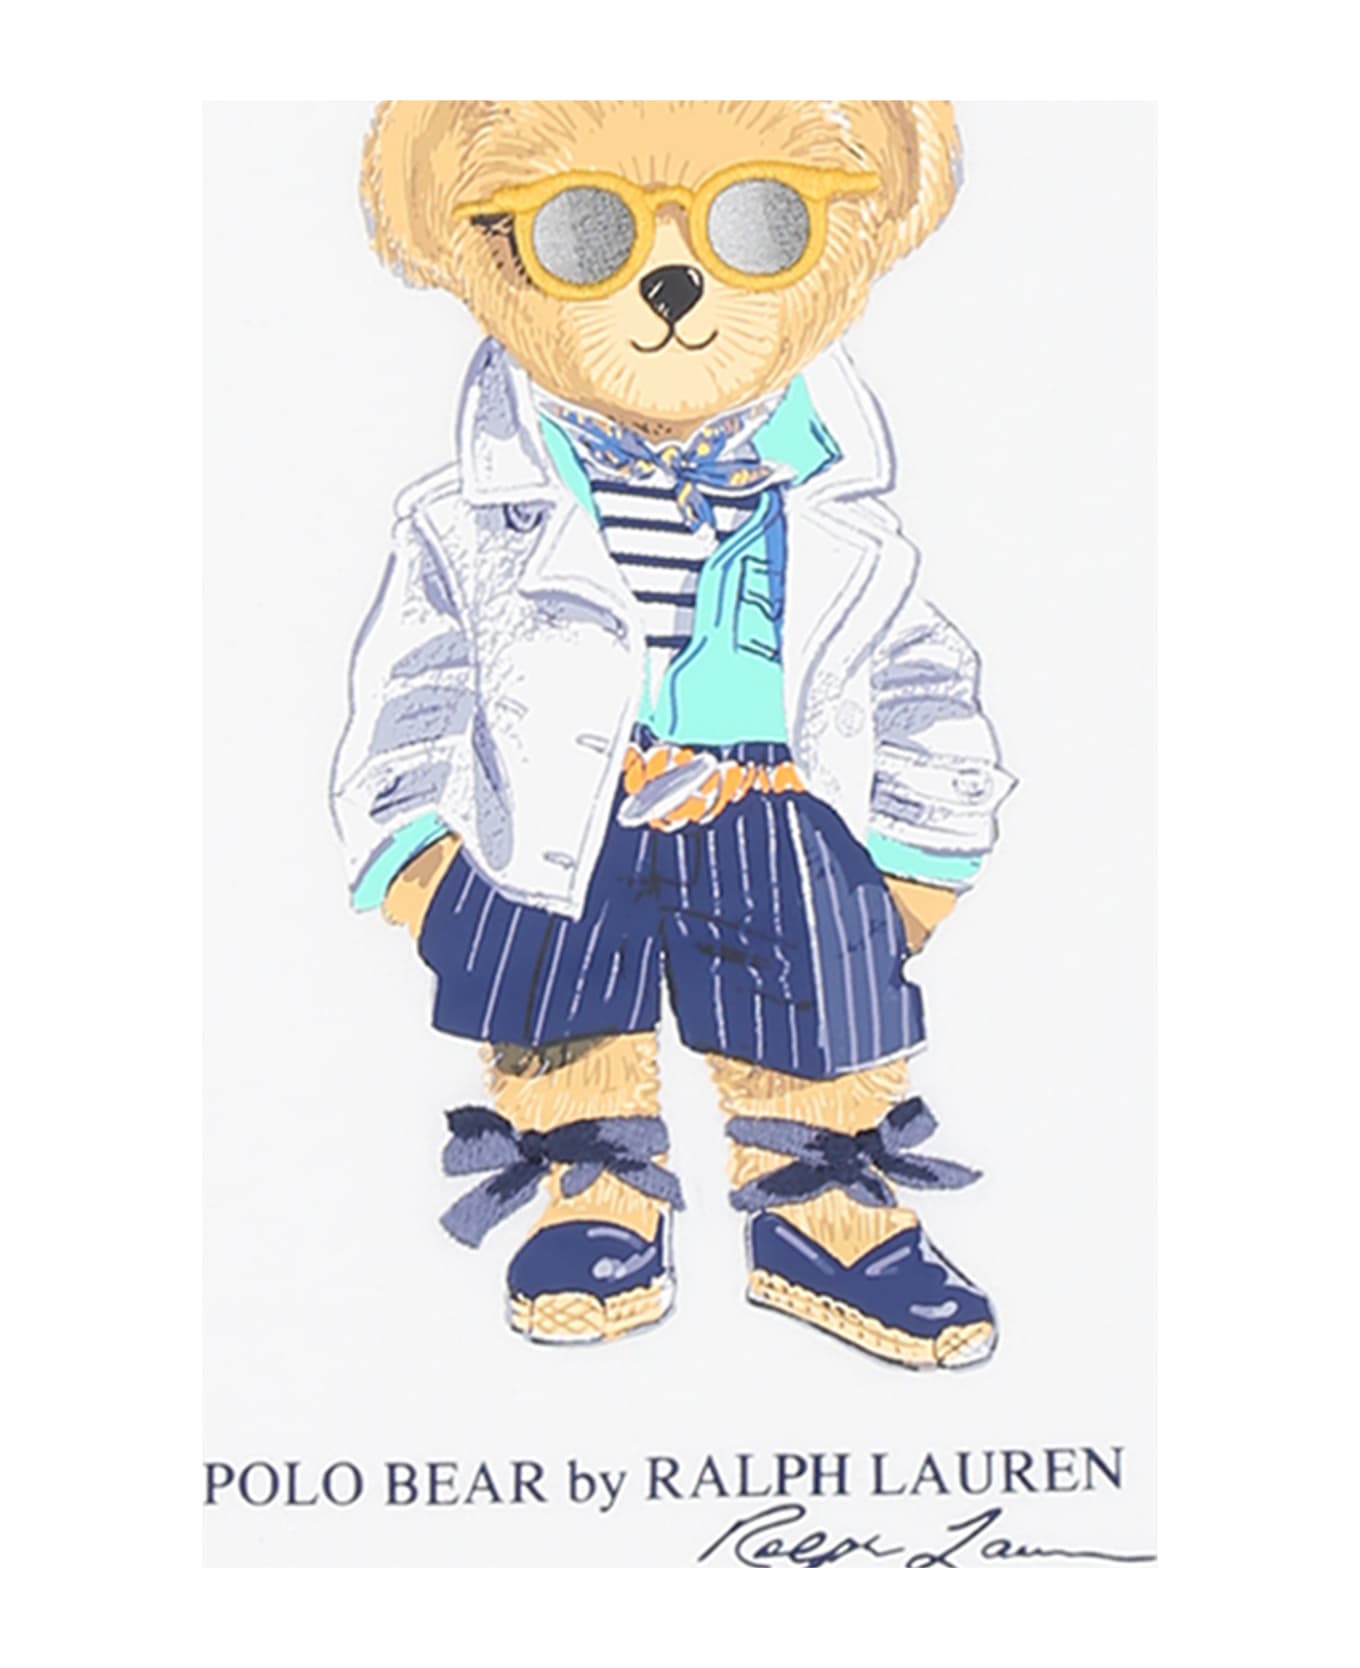 Ralph Lauren White T-shirt For Baby Girl With Polo Bear - White